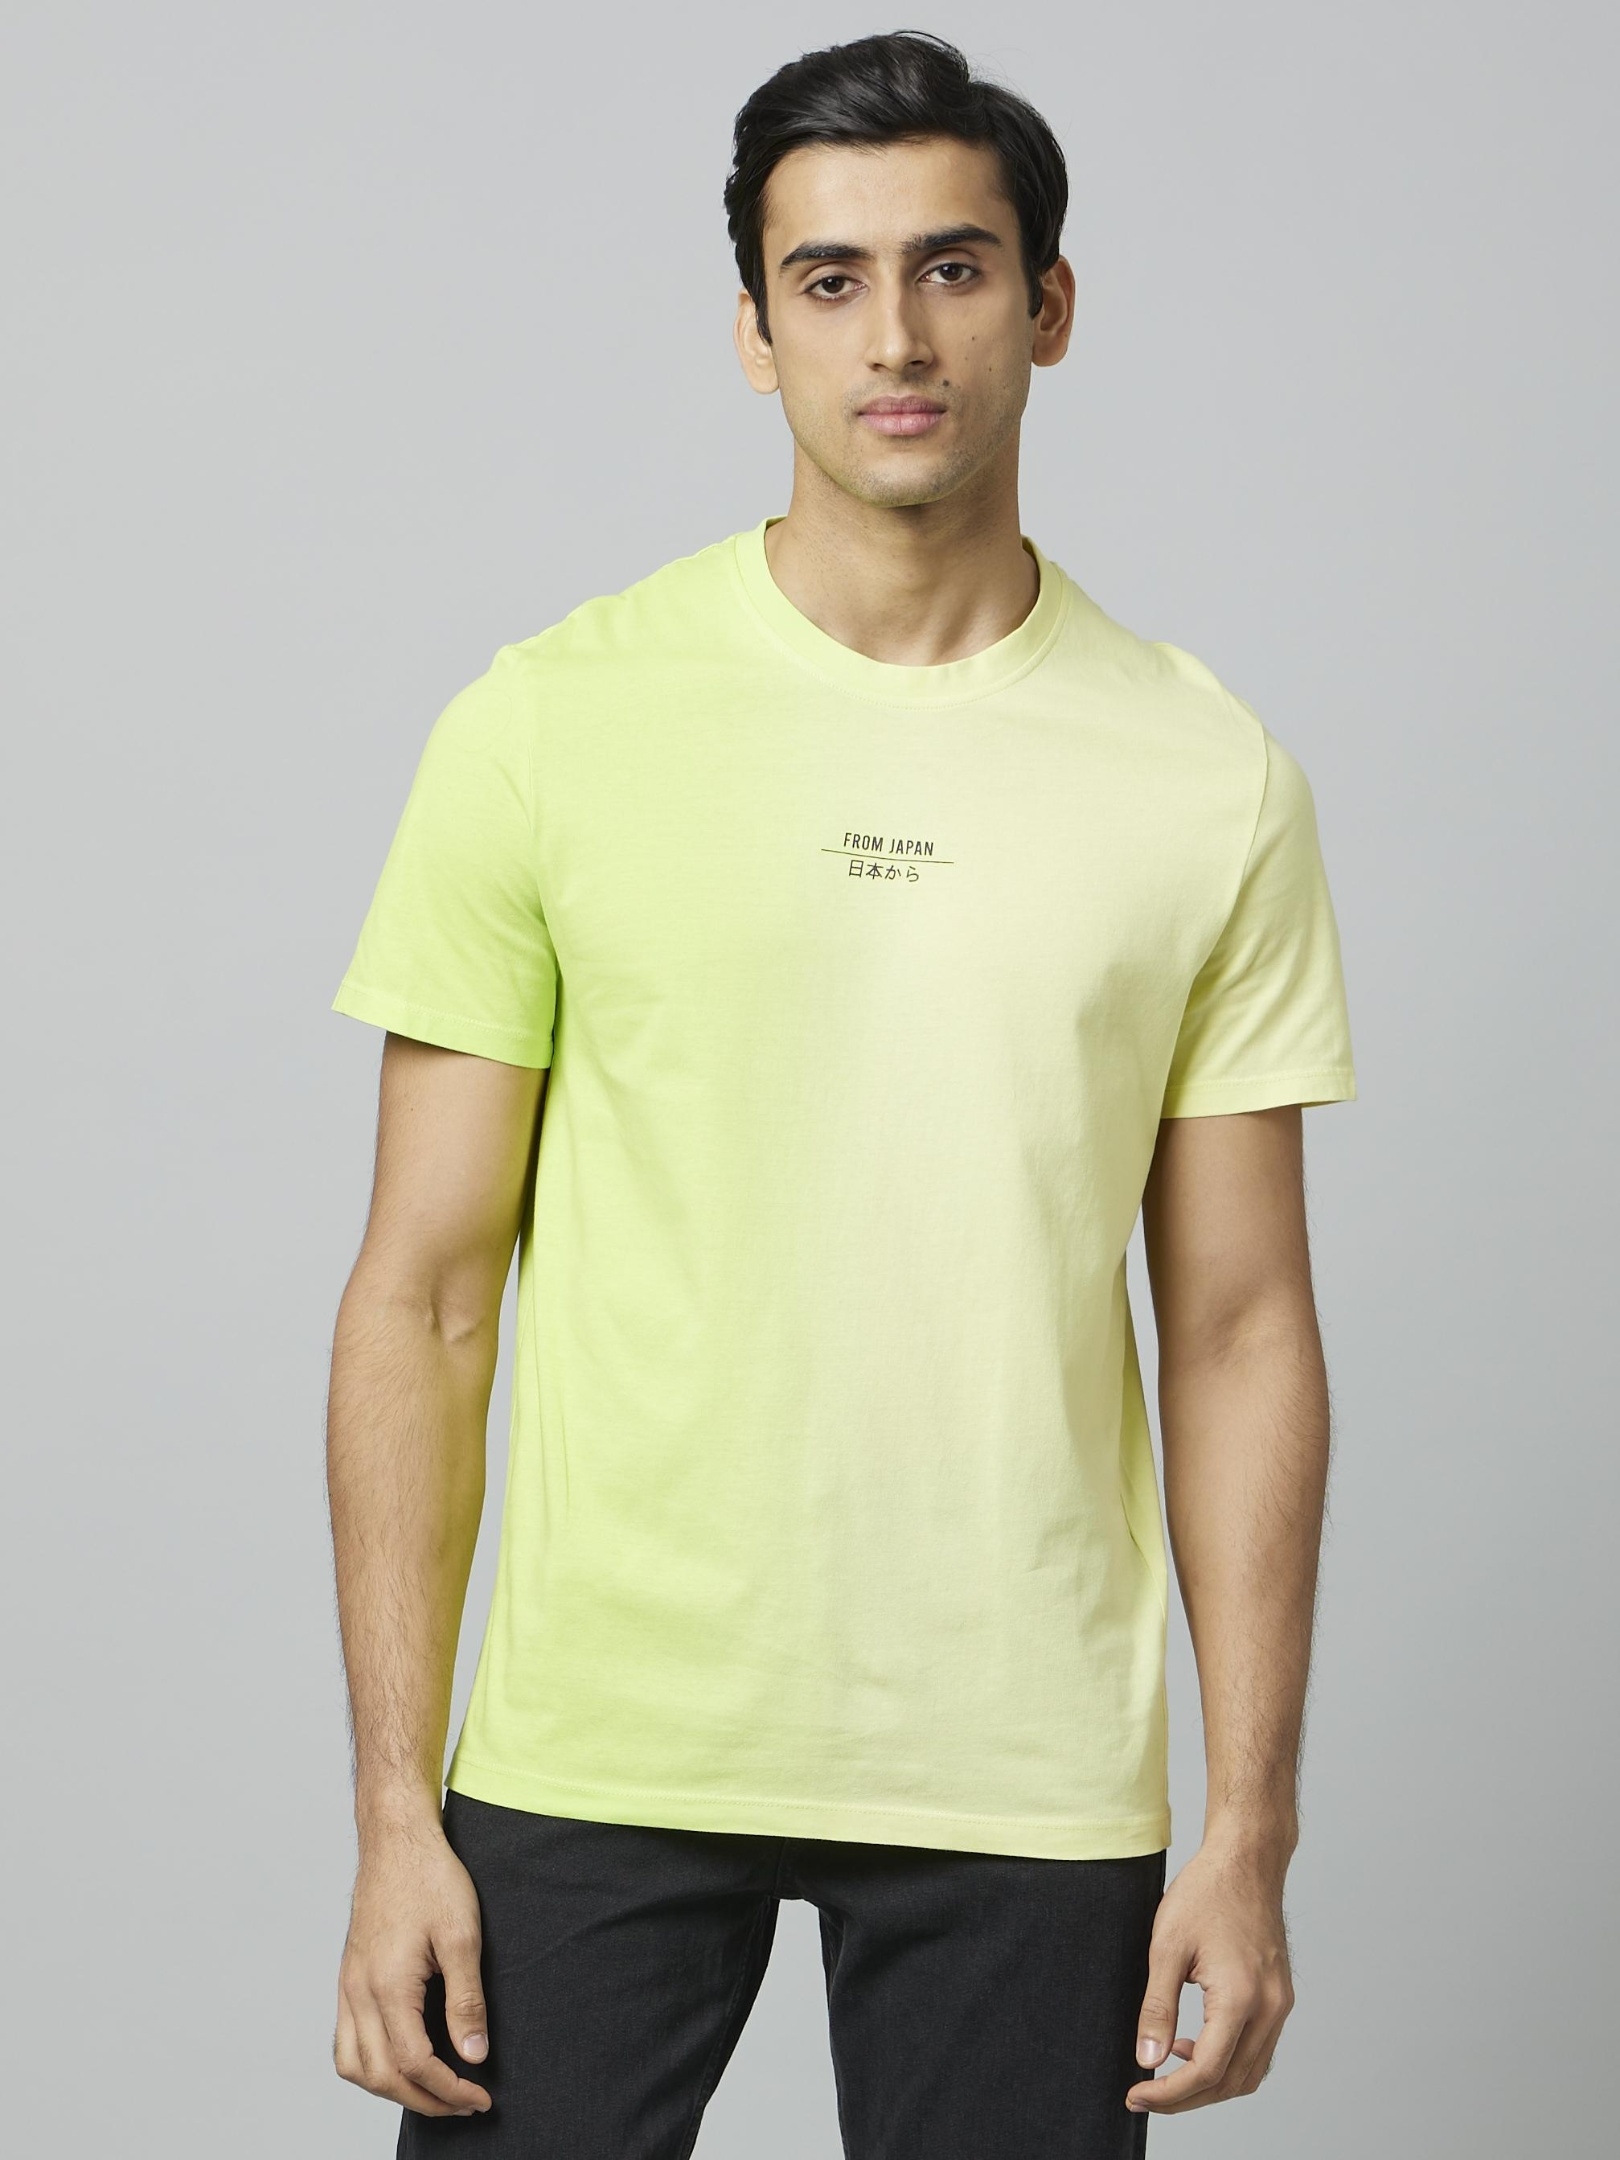 Celio Graphic Printed Yellow Short Sleeves Round Neck Tshirt